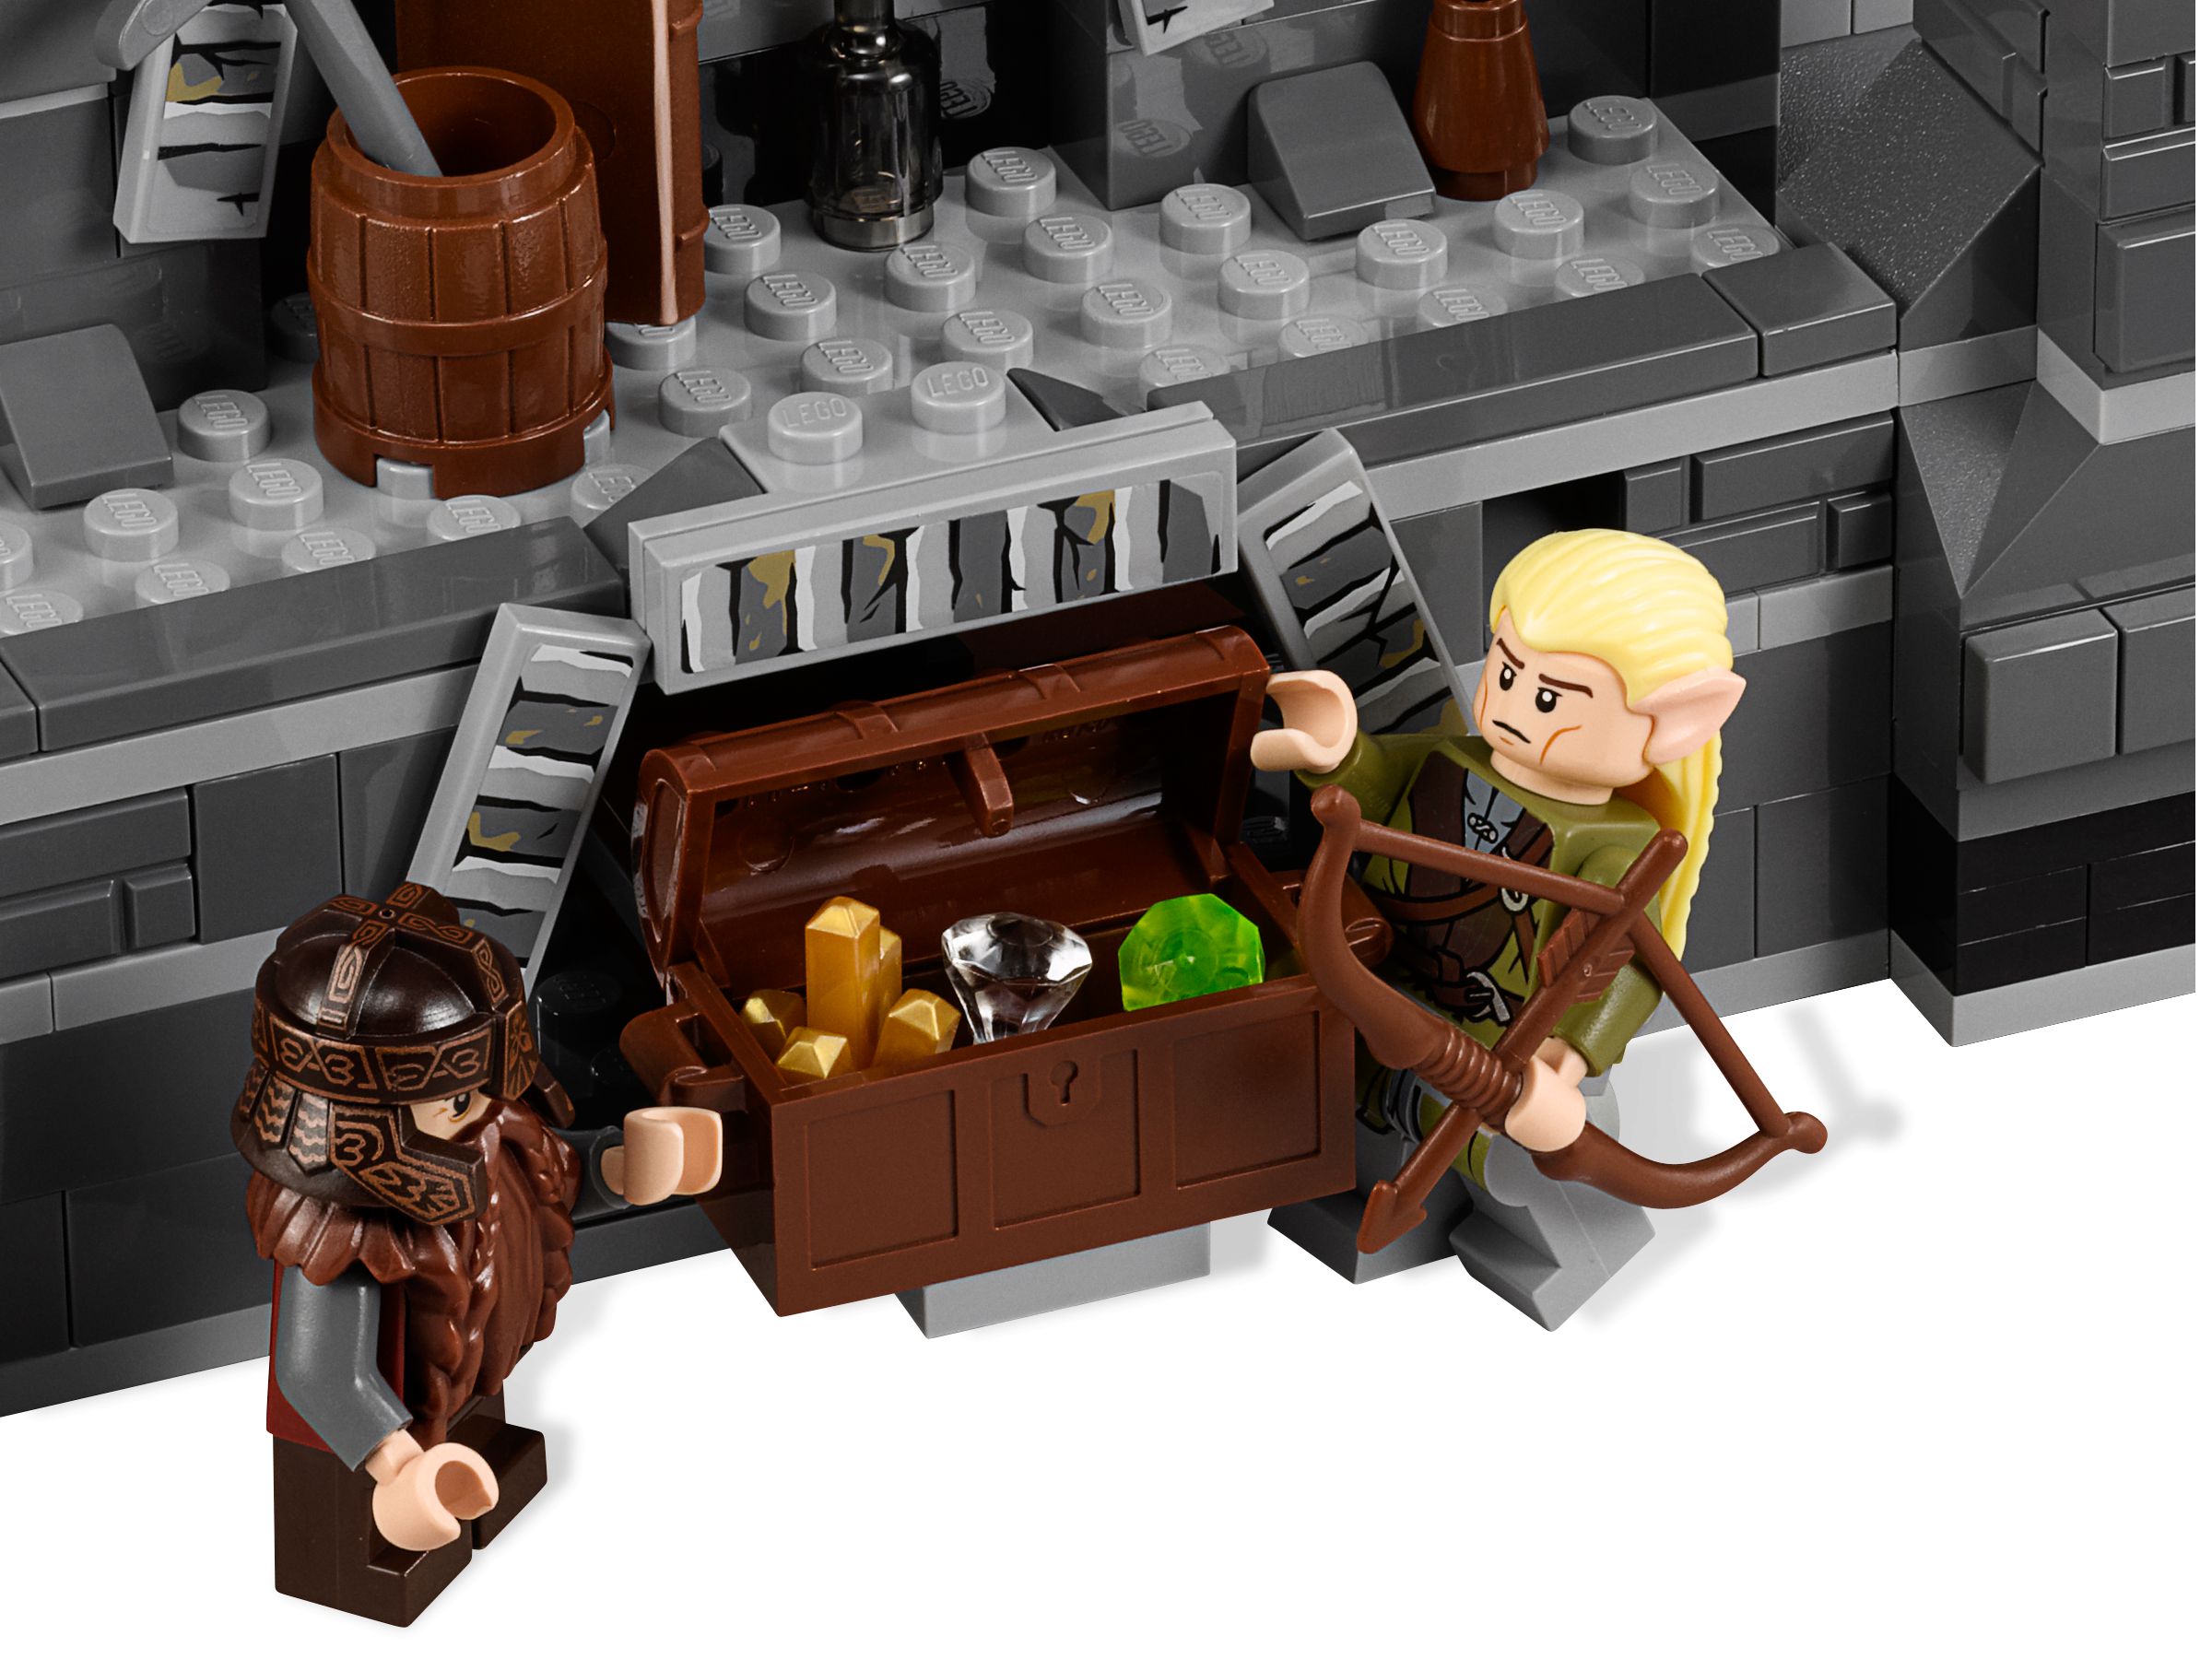 LEGO Lord of the Rings 9473 Die Minen von Moria LEGO_9473_alt5.jpg